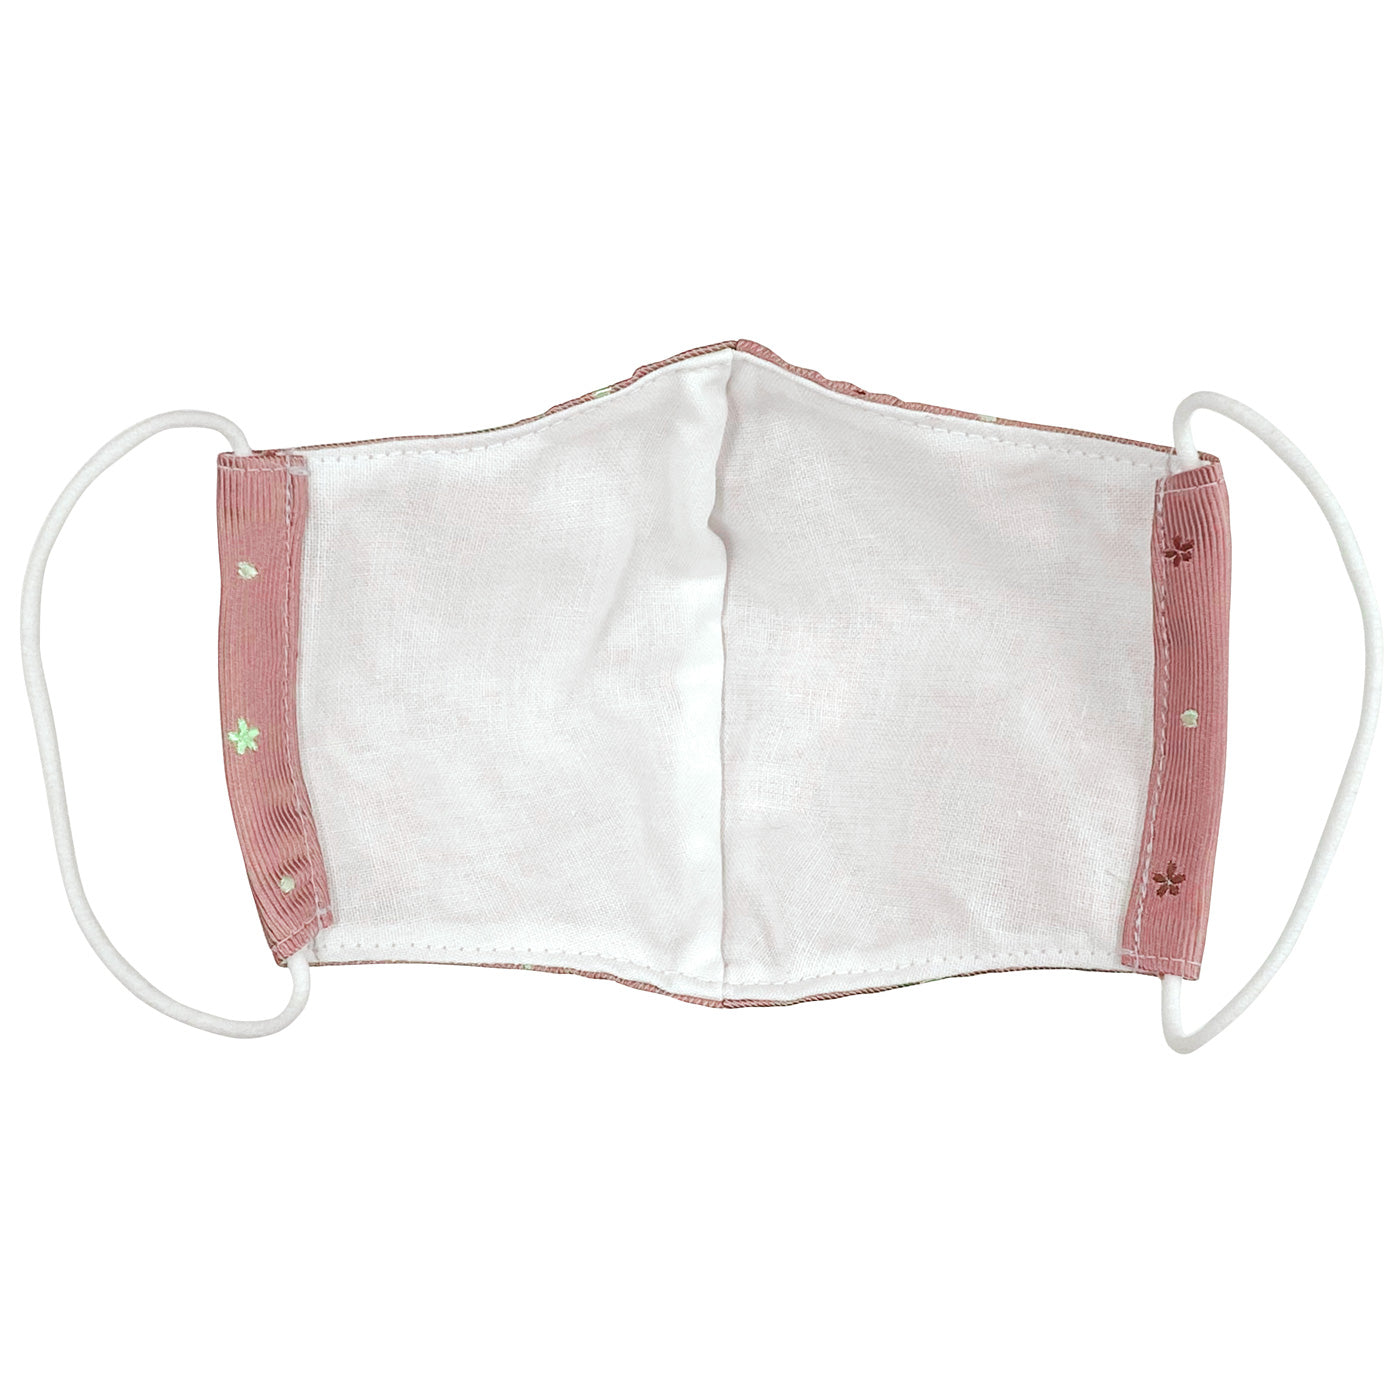 Washable Silk Face Mask Reusable Unisex -15. Sakura Cherry Blossoms Pattern Medium Made in Japan FORTUNA Tokyo